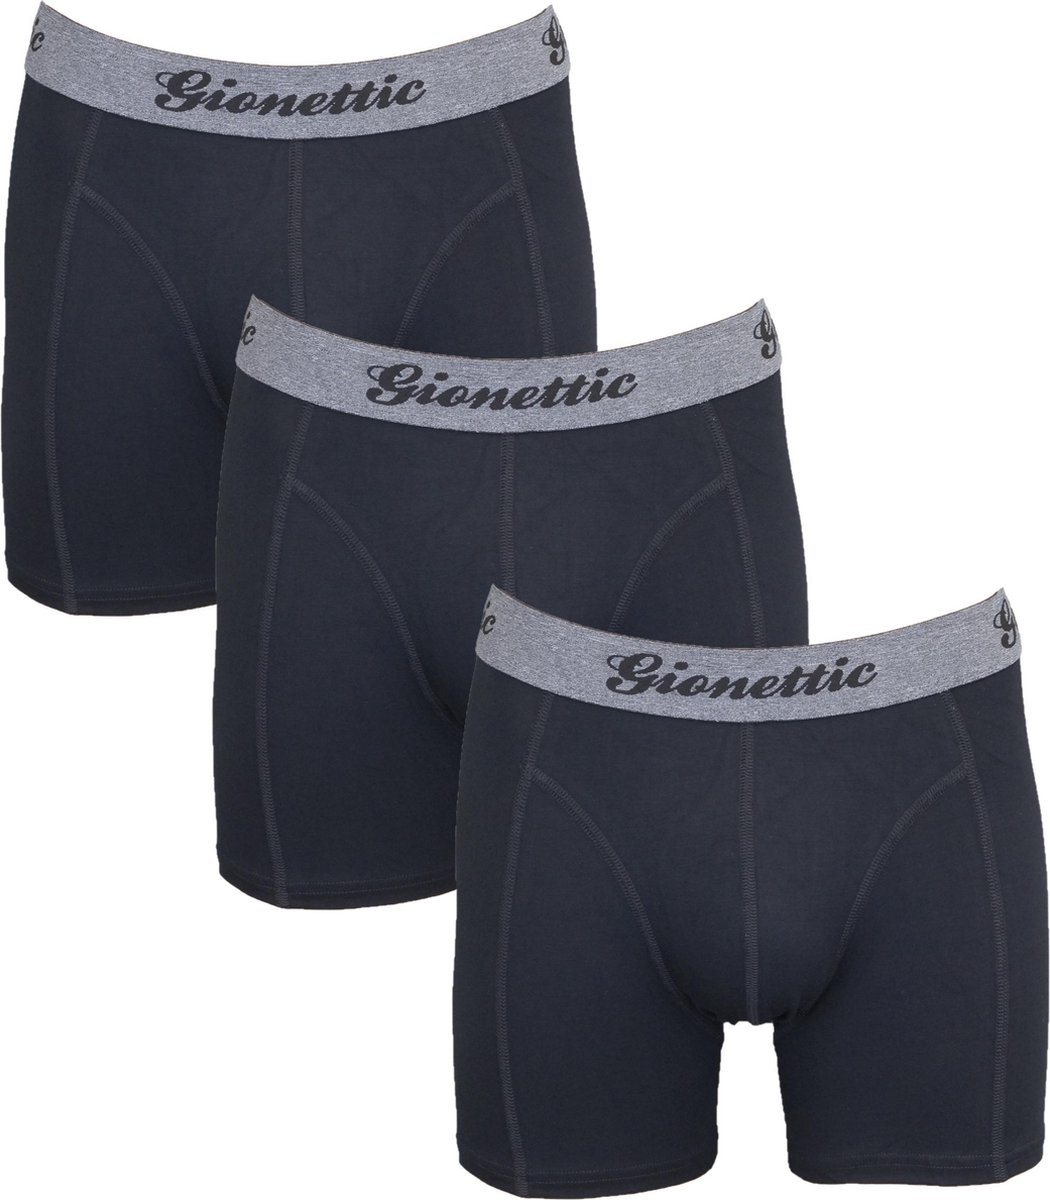 3-Pack Gionettic Modal Heren boxershorts Zwart maat XL